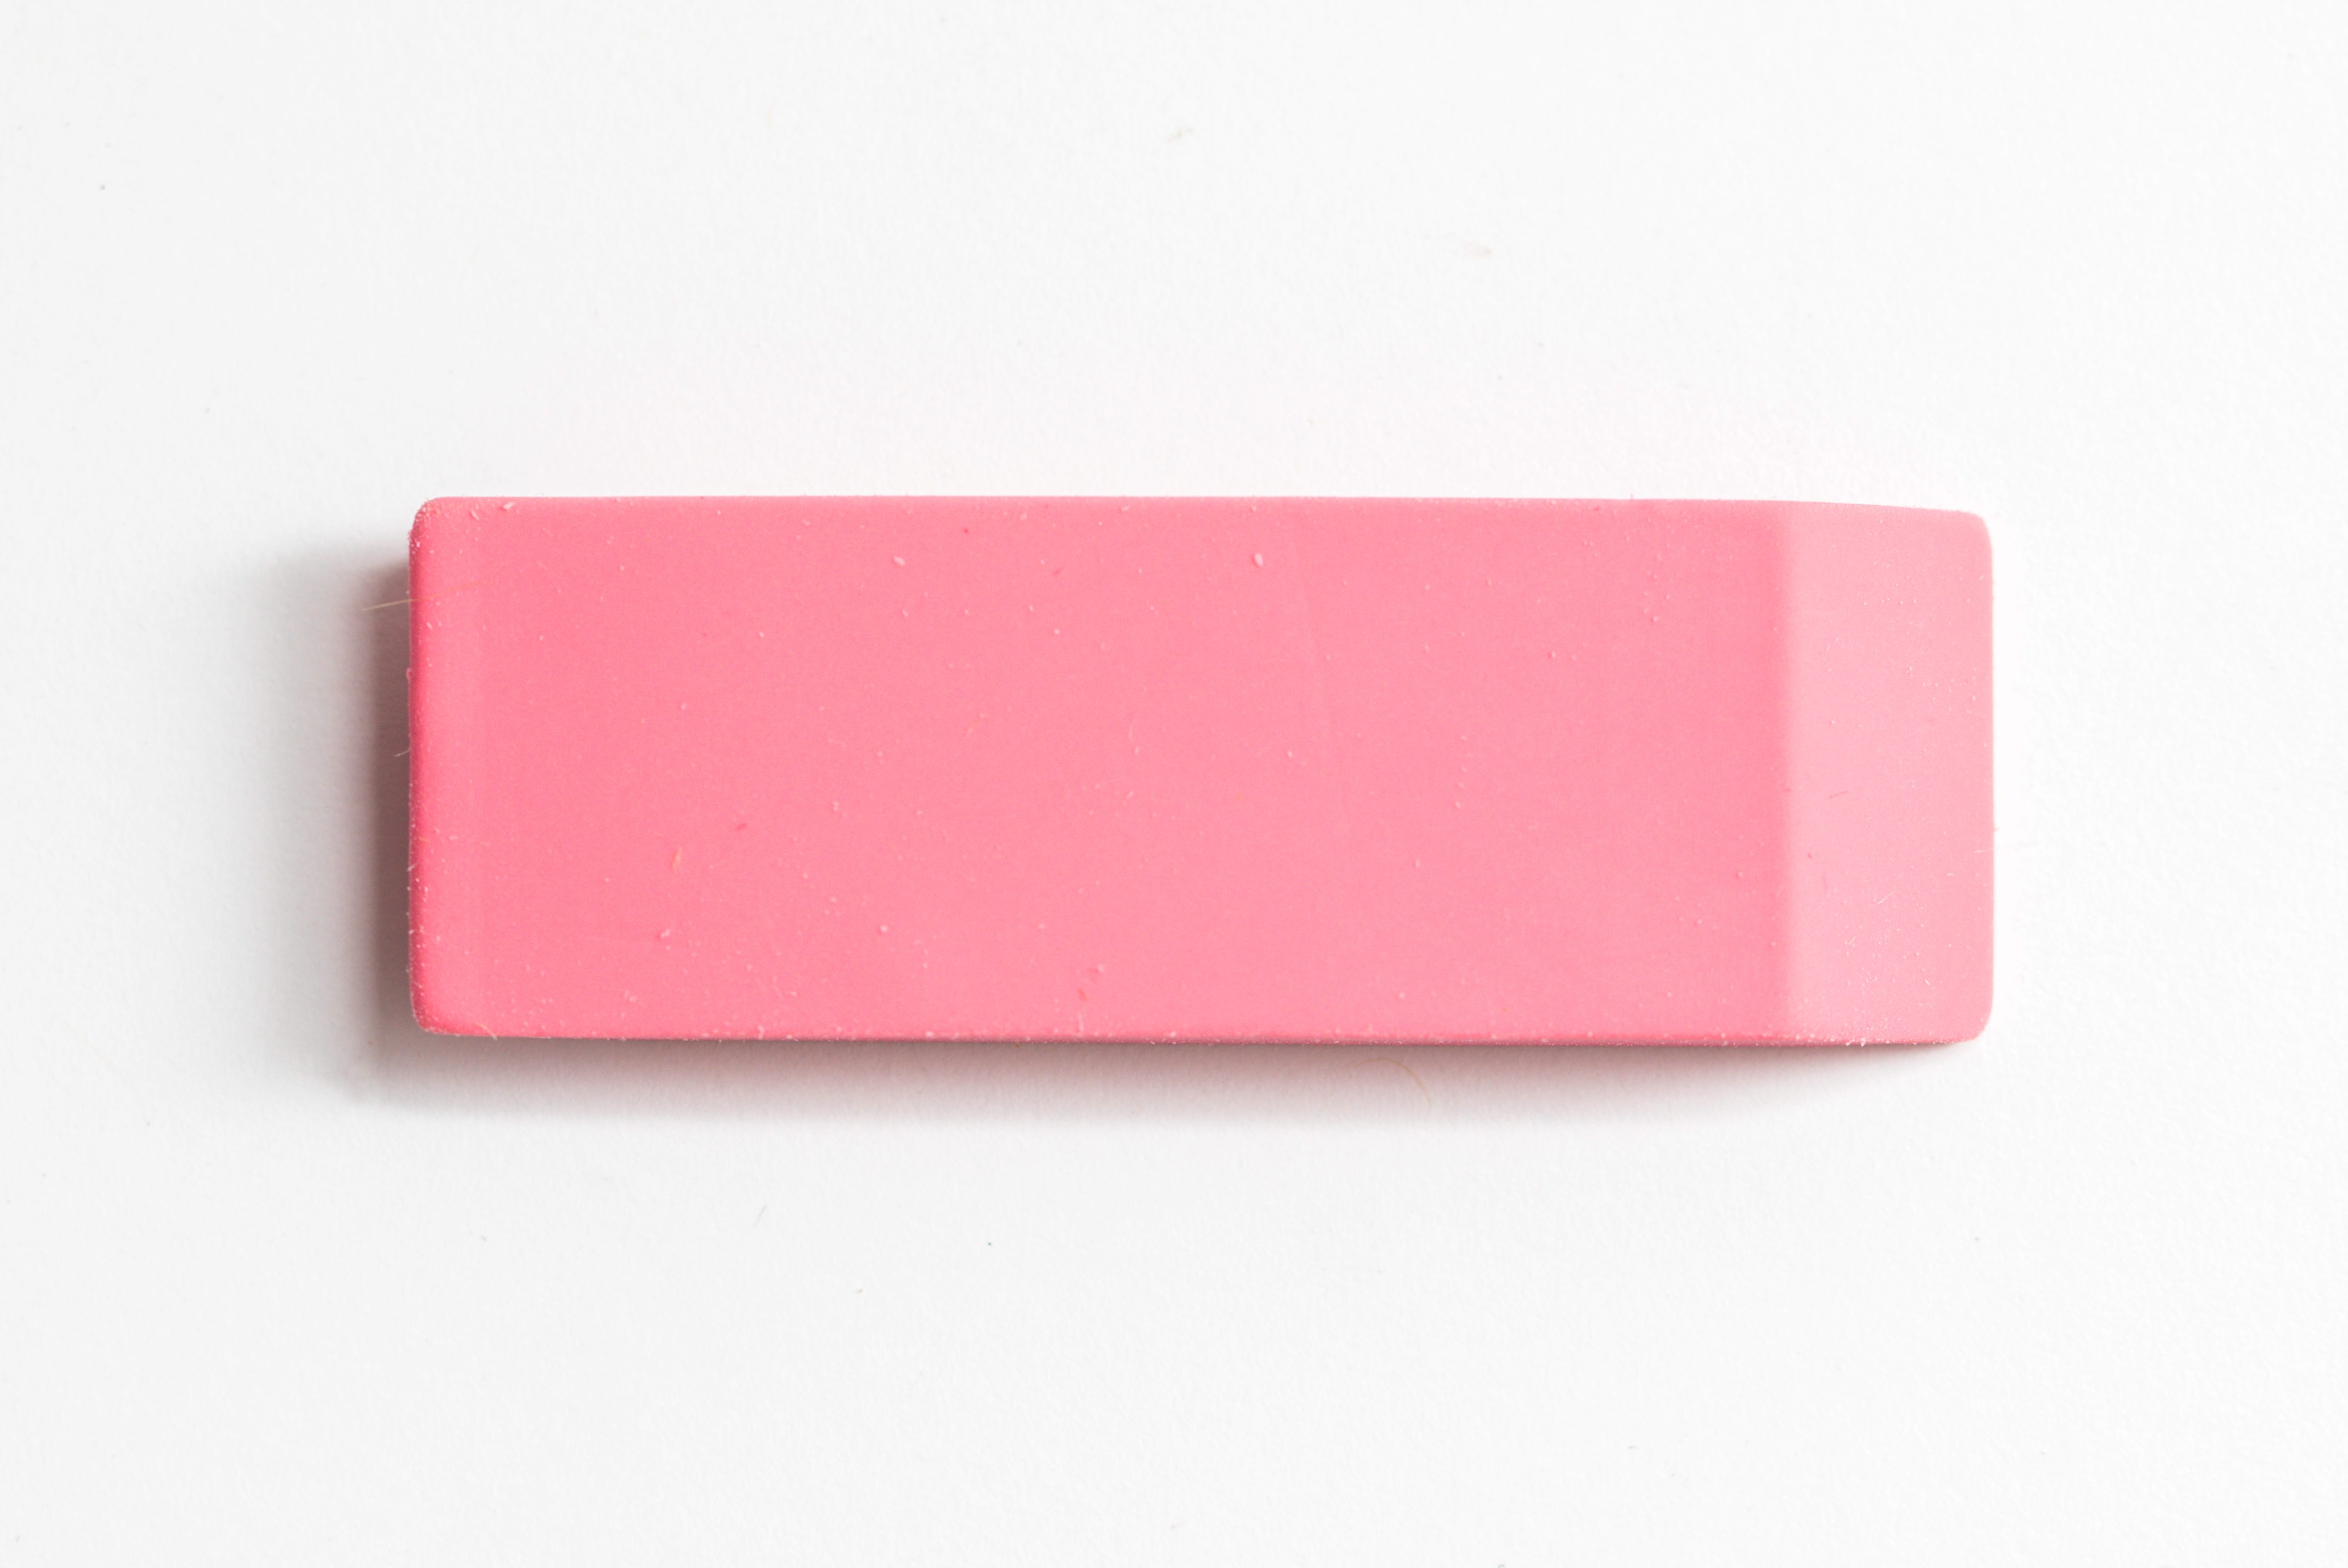 Pink eraser shot up close against a white background